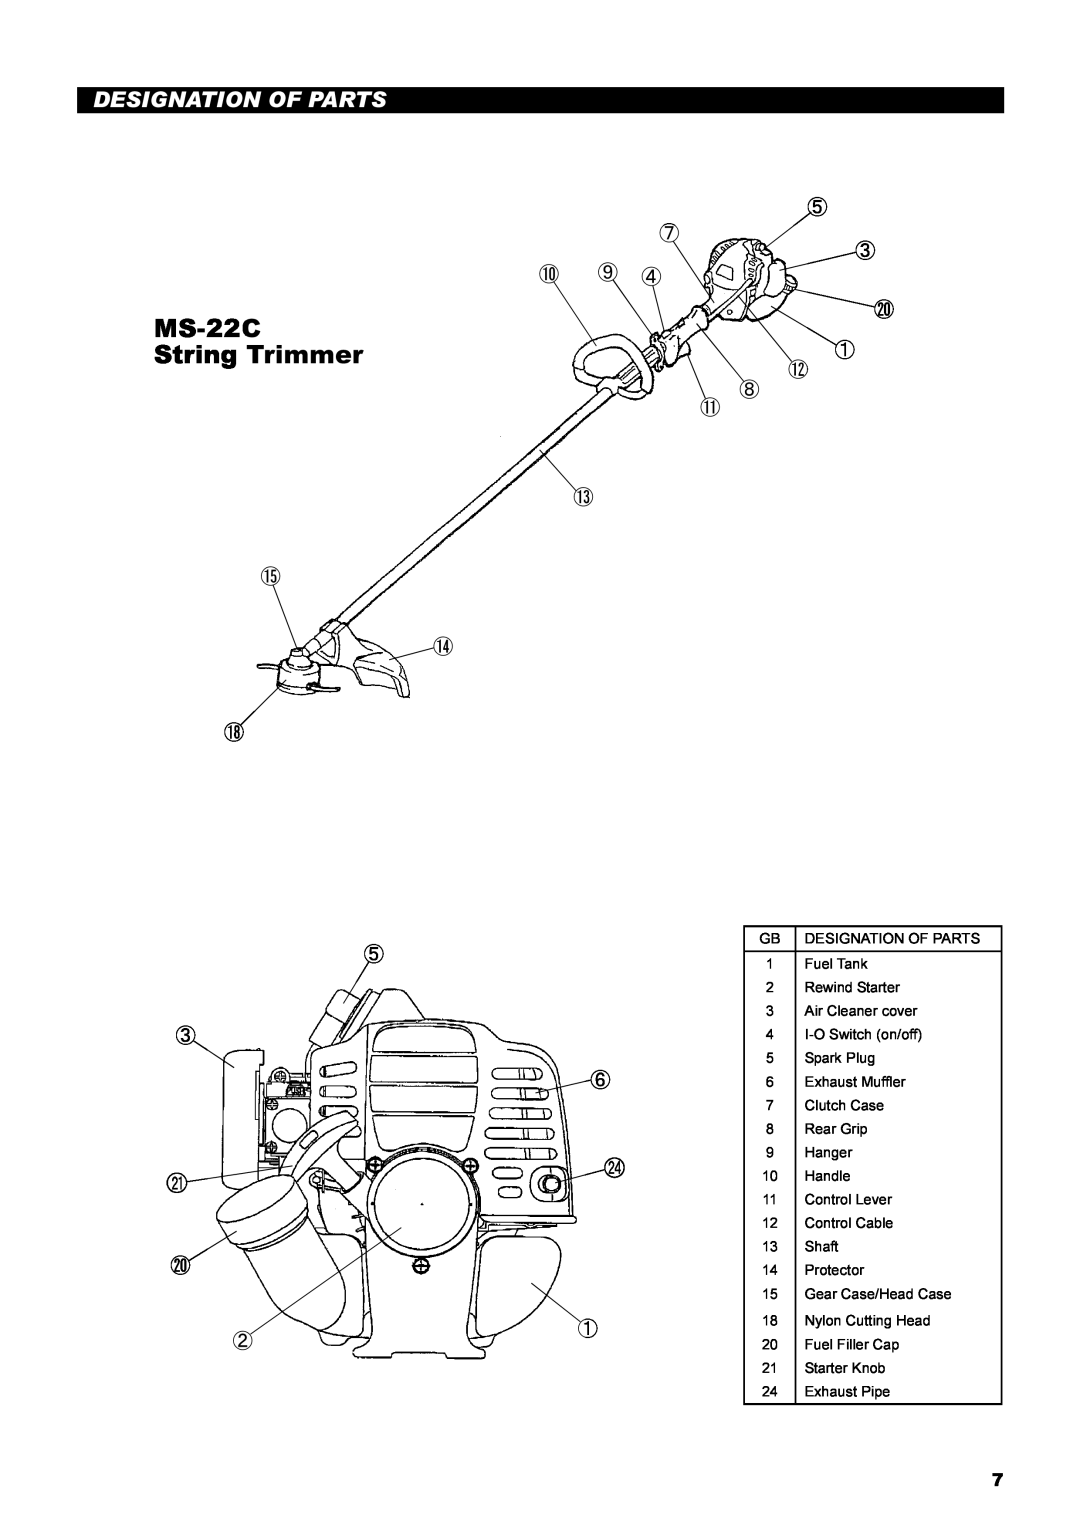 Dolmar instruction manual MS-22C String Trimmer, Designation Of Parts, ⑤ ⑦ ③ ⑩ ⑨ ④ ⑳ ① ⑫ ⑧ ⑪ ⑬, ⑮ ⑭ ⑱ 